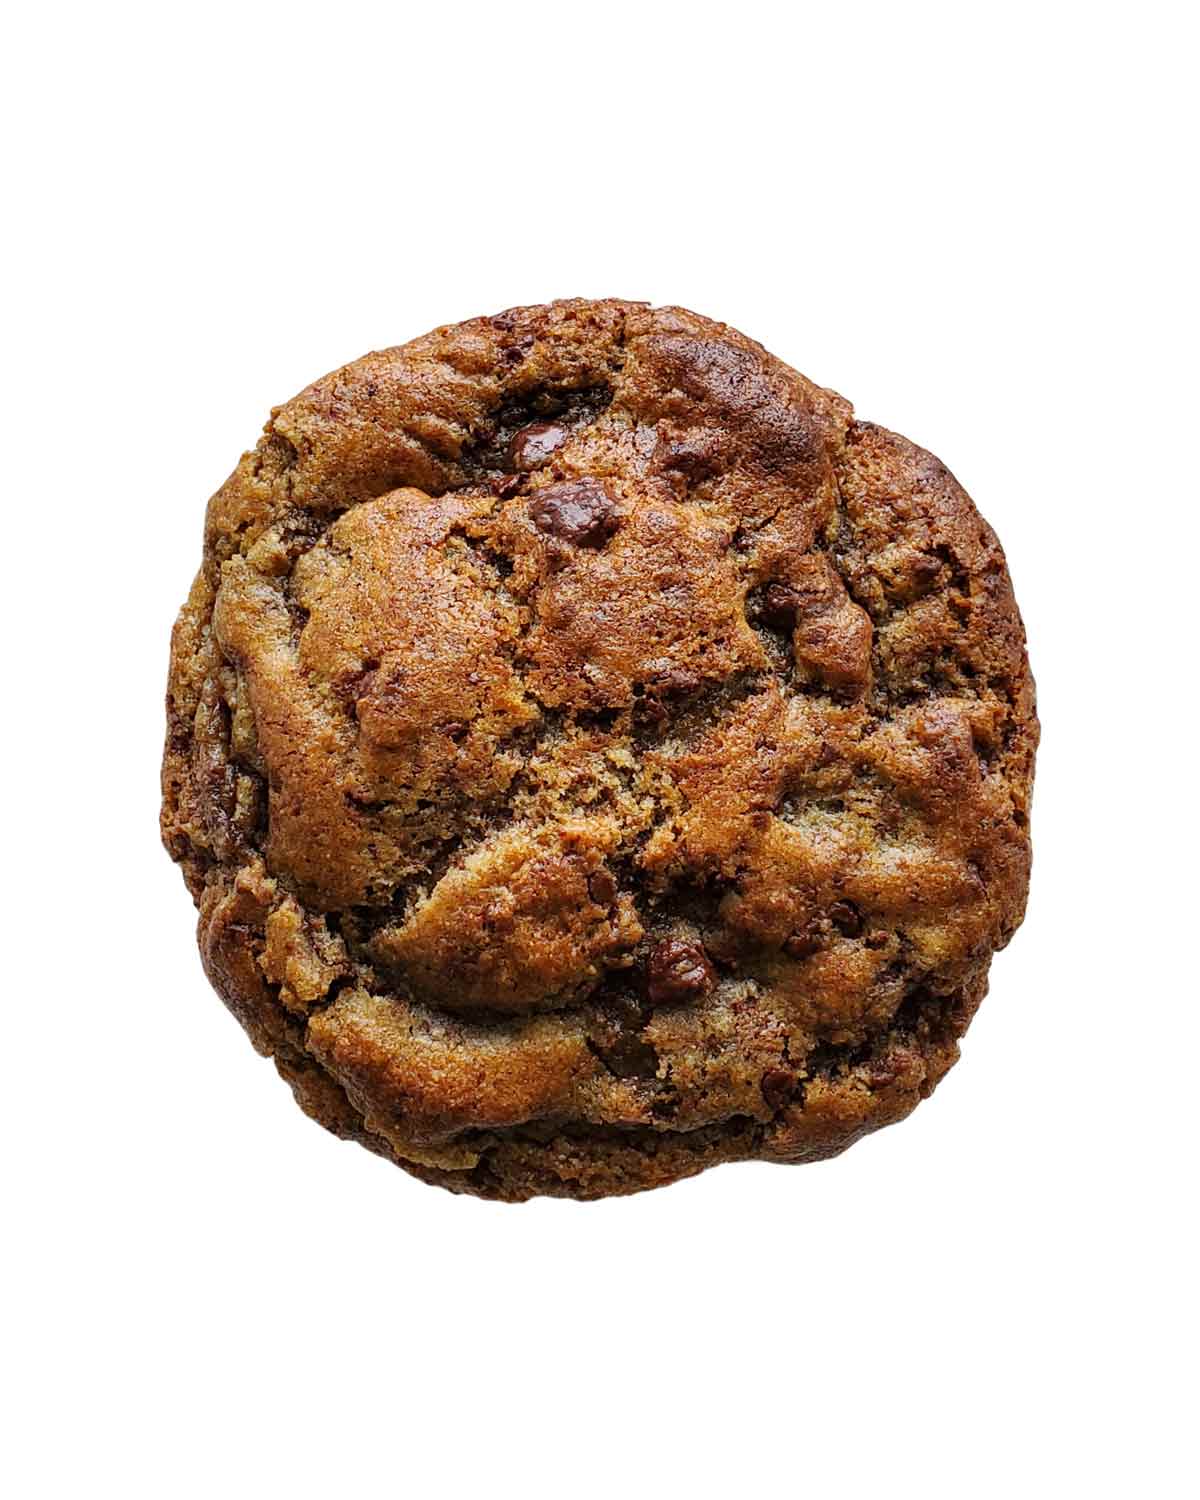 A sourdough chocolate chip cookie.